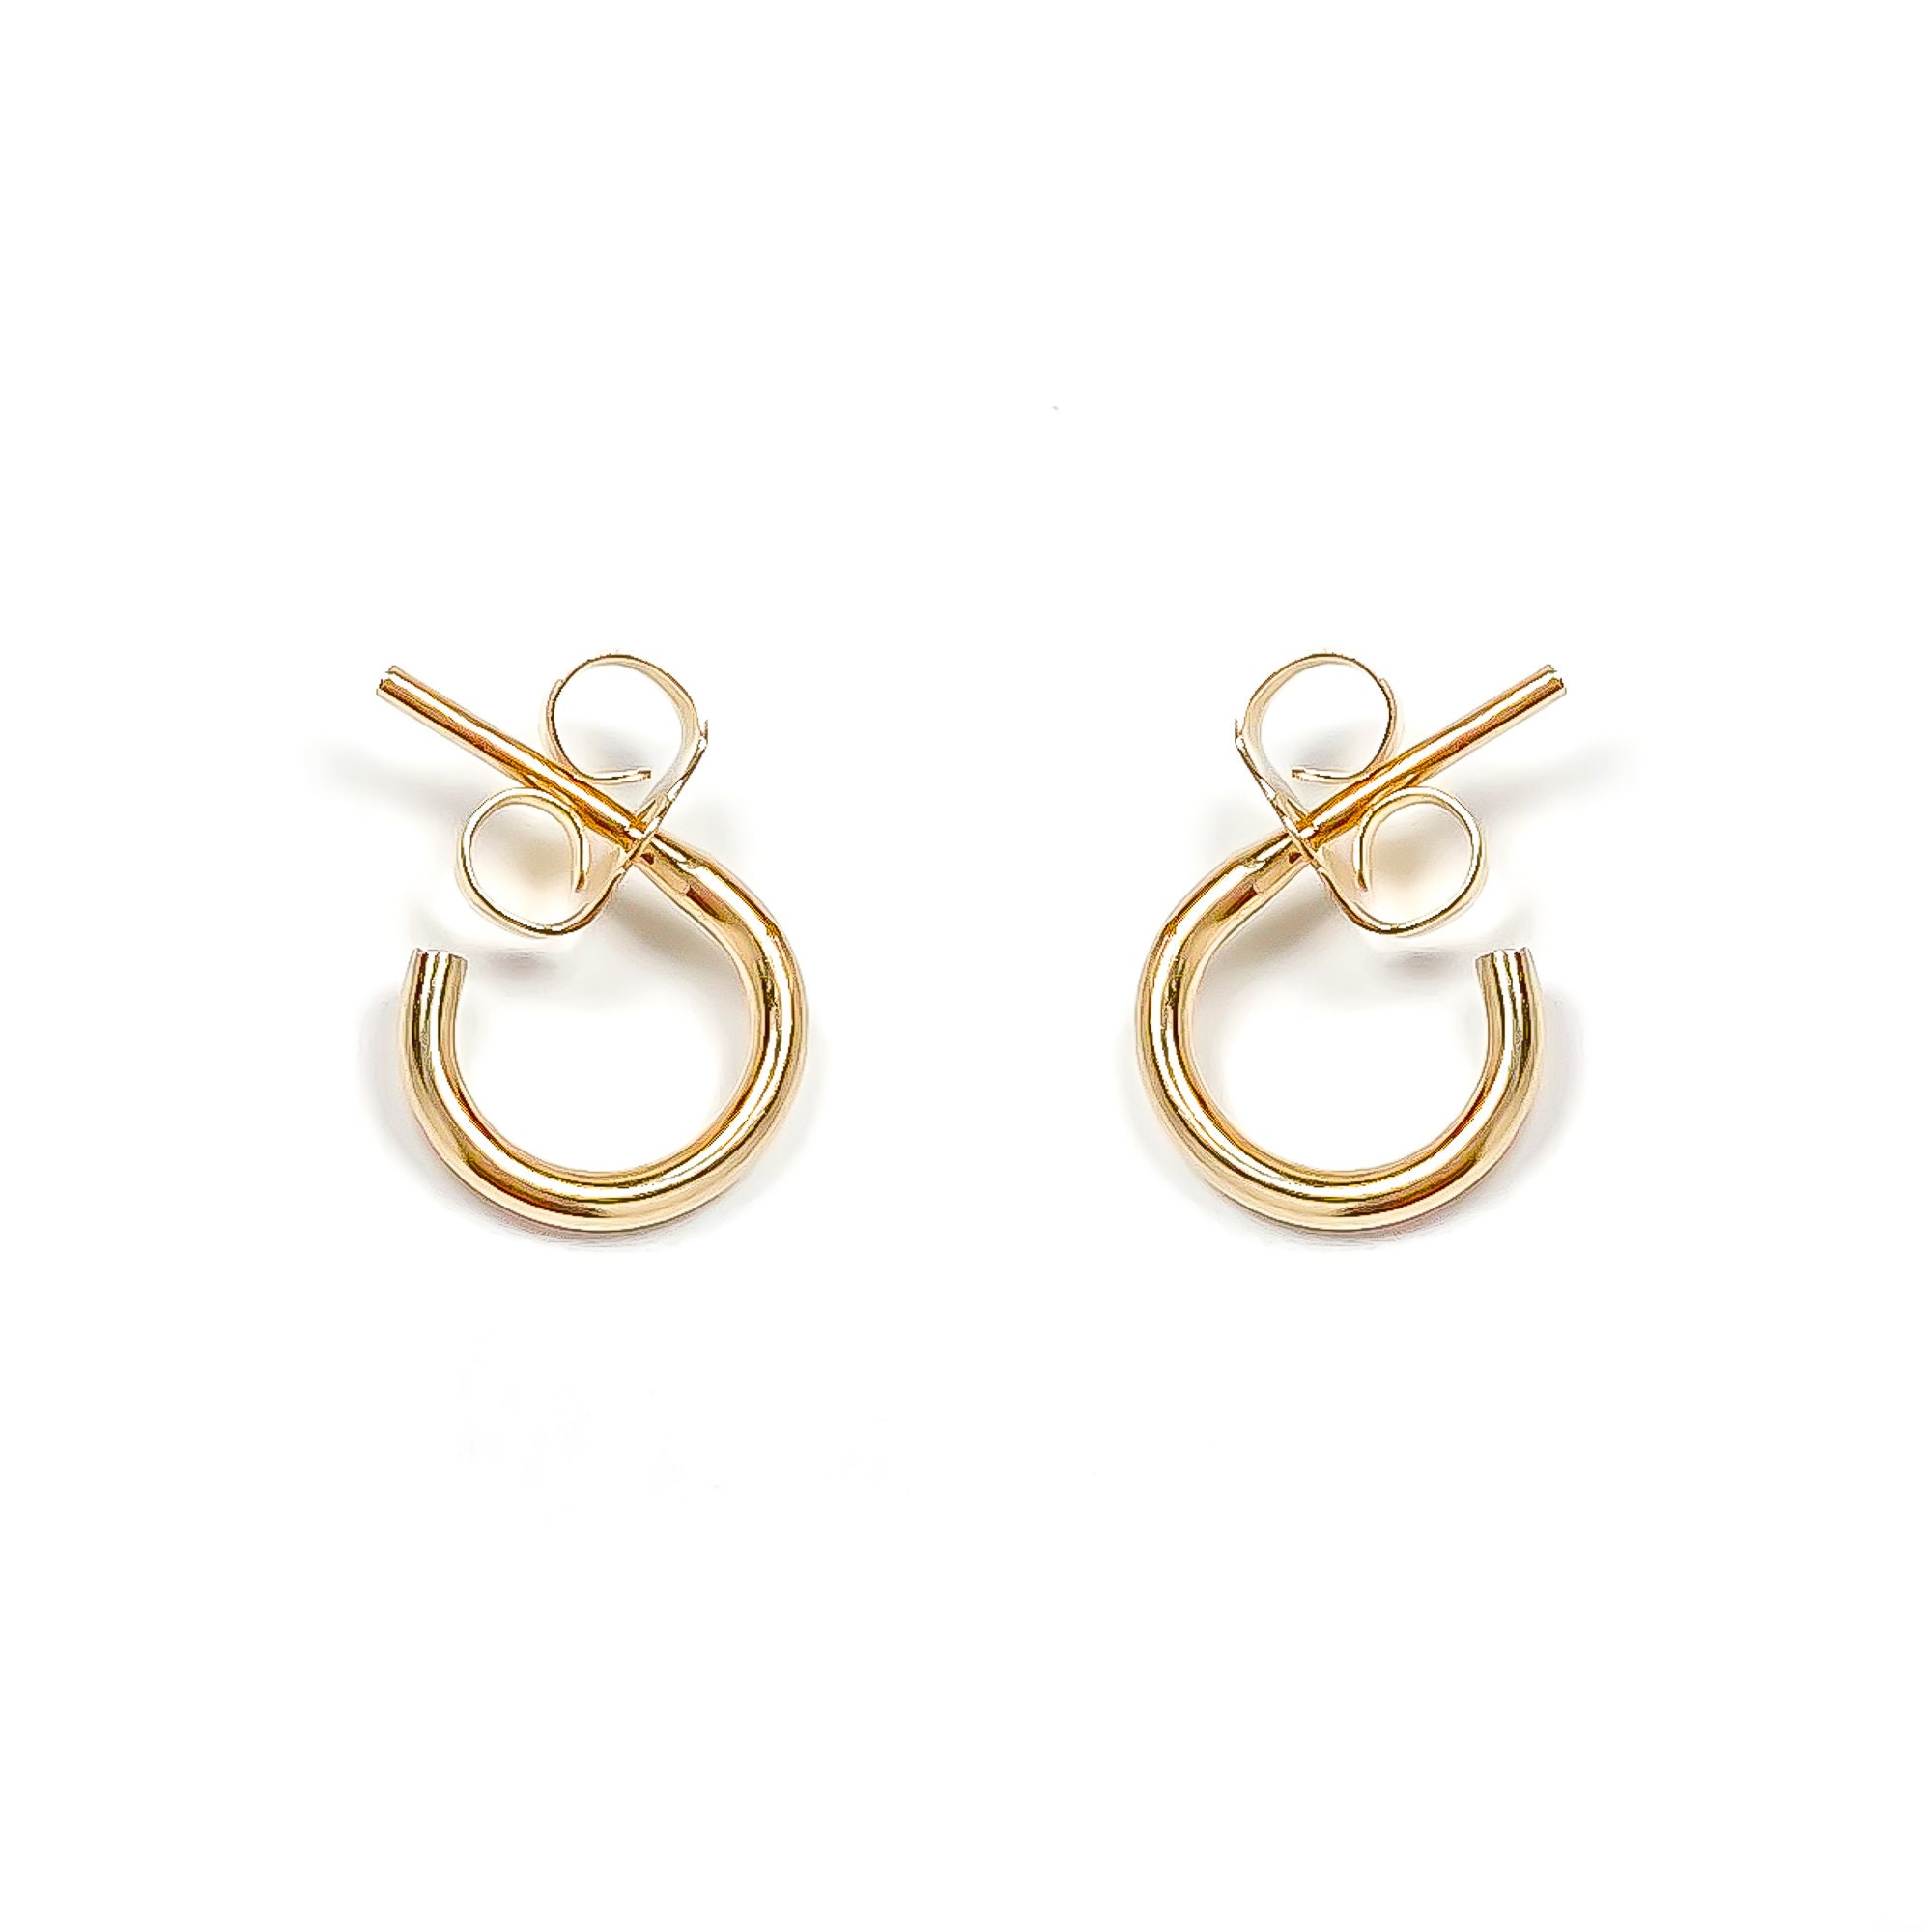 Large Gold Earring Backs - JBacks-LgGold-5pk - Sensitively Yours